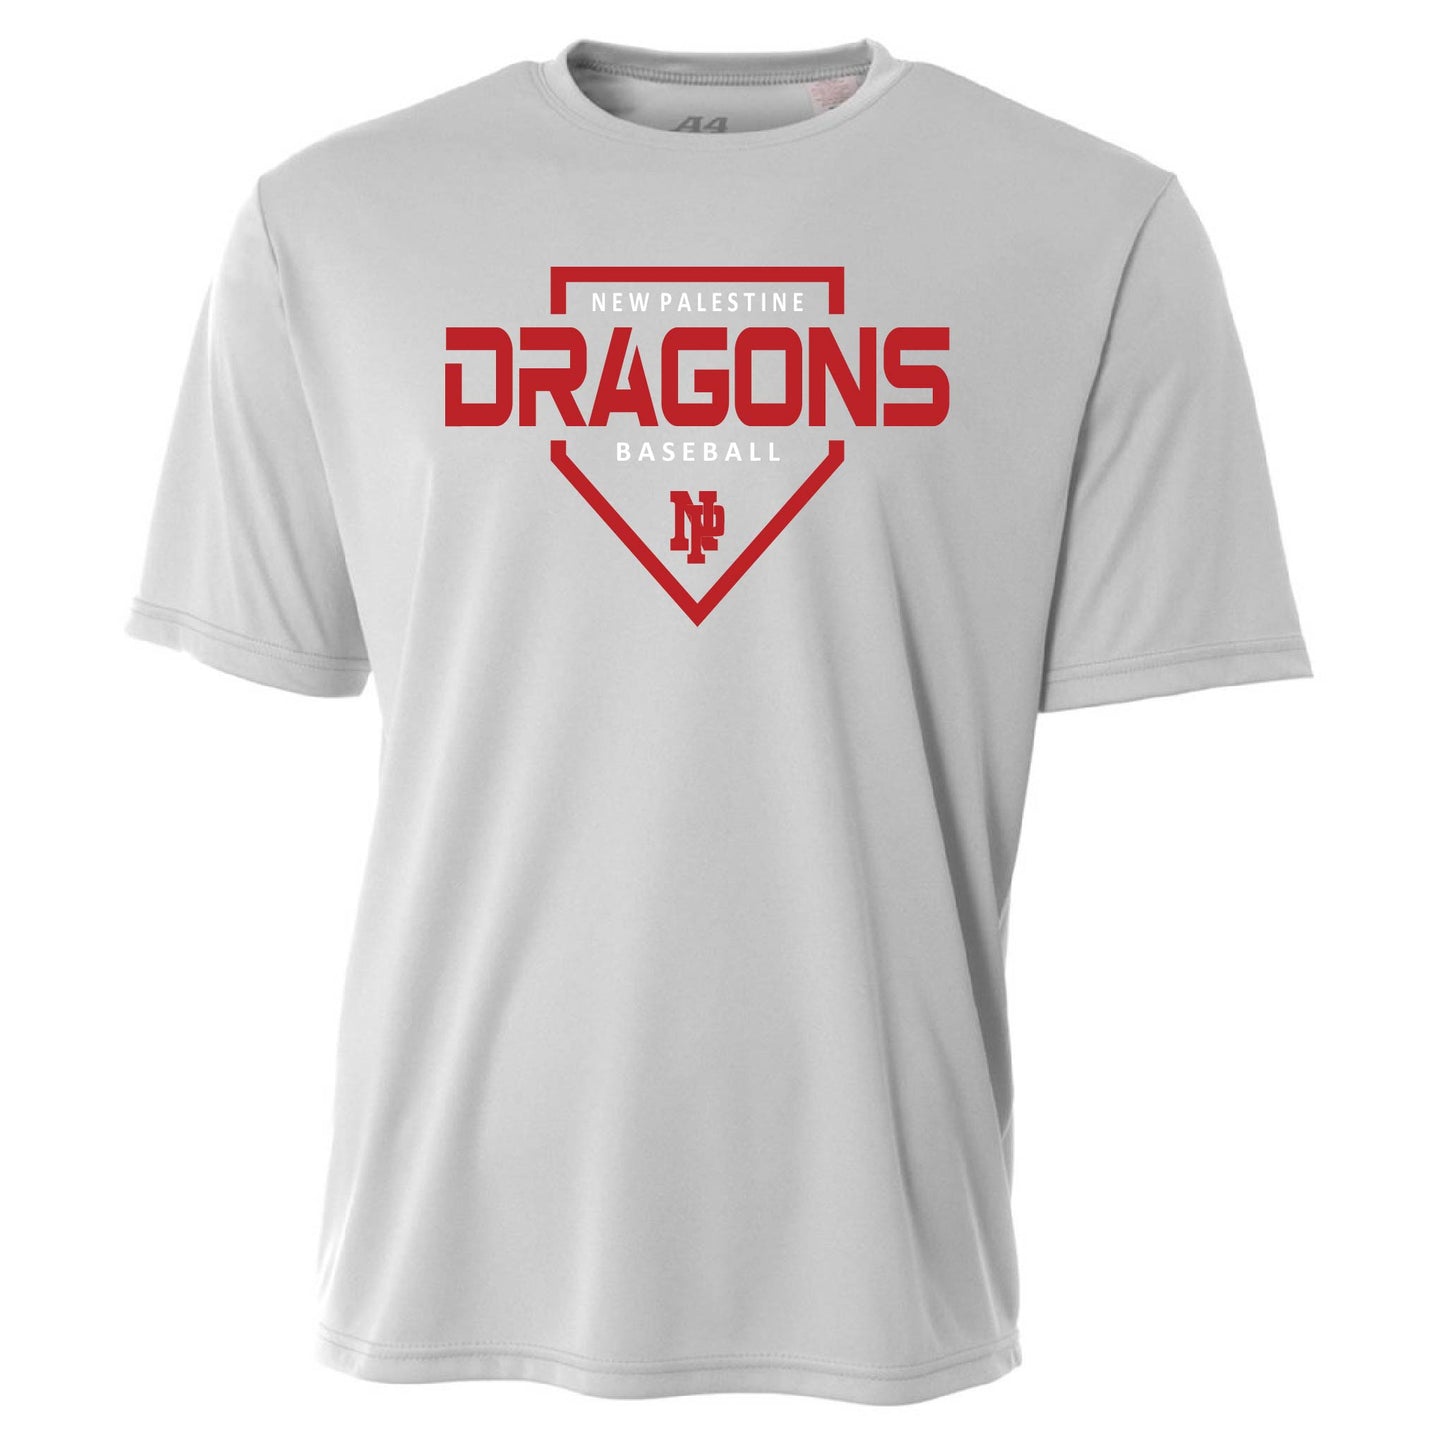 Youth S/S T-Shirt - DRAGONS Baseball